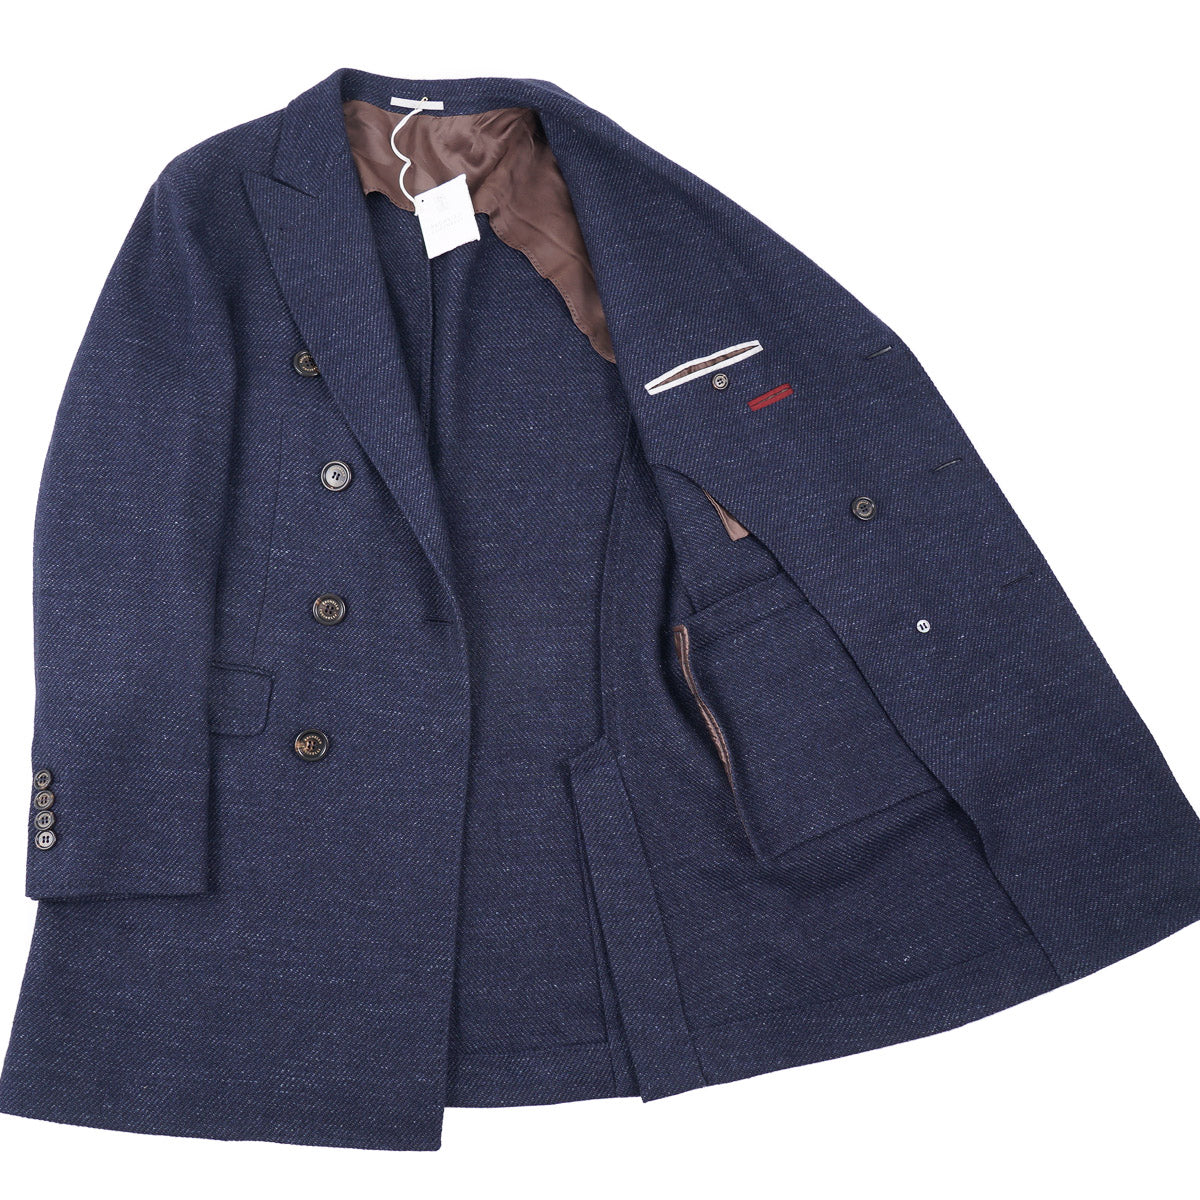 Brunello Cucinelli Pure Cashmere Overcoat - Top Shelf Apparel